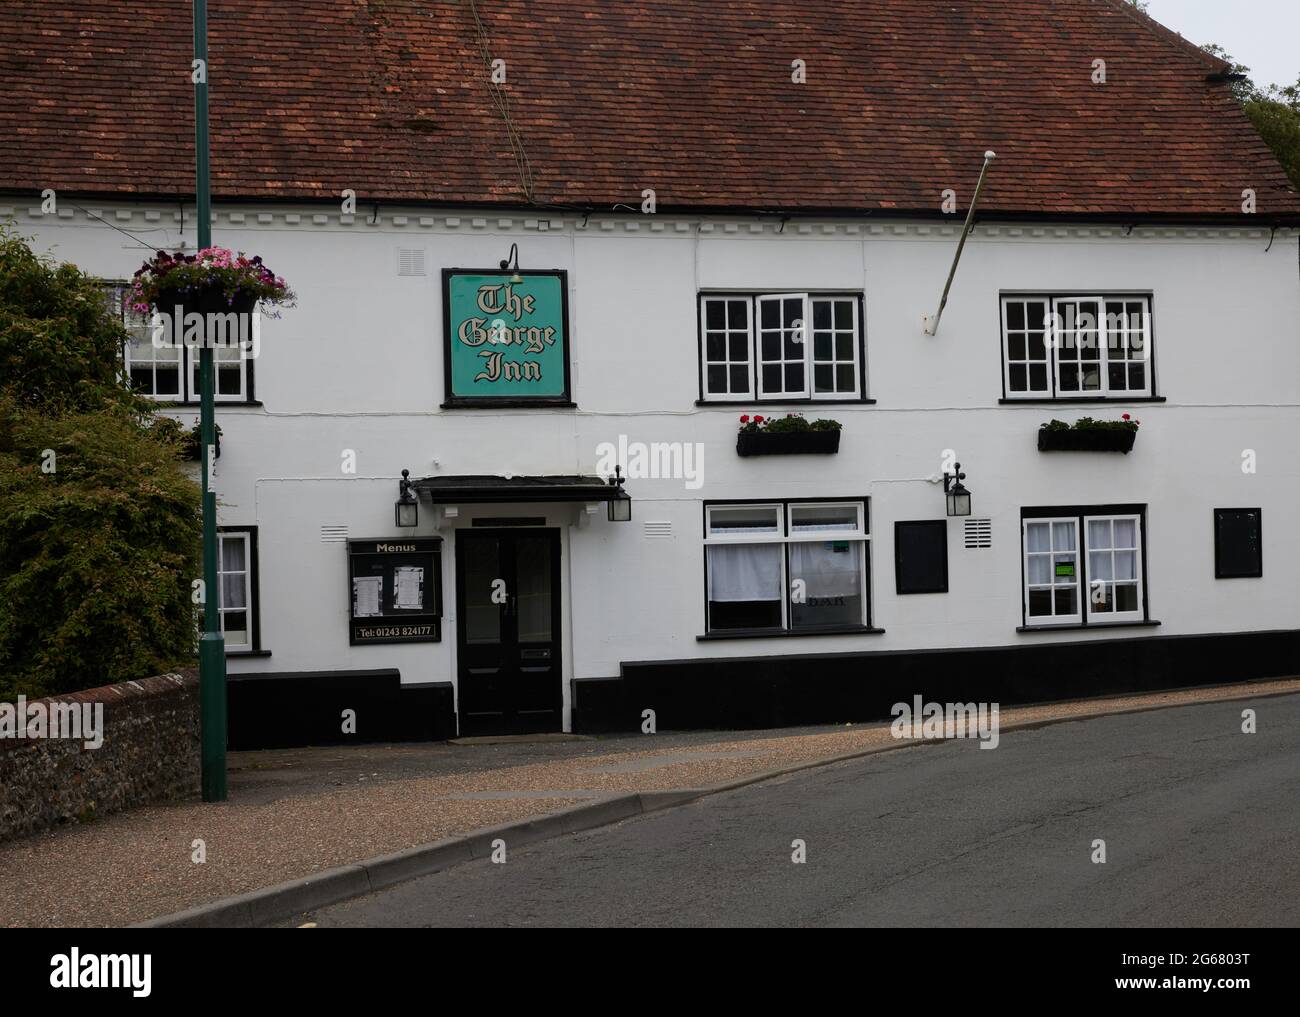 The George Inn pub in Felpham, West Sussx, England, UK. Stock Photo